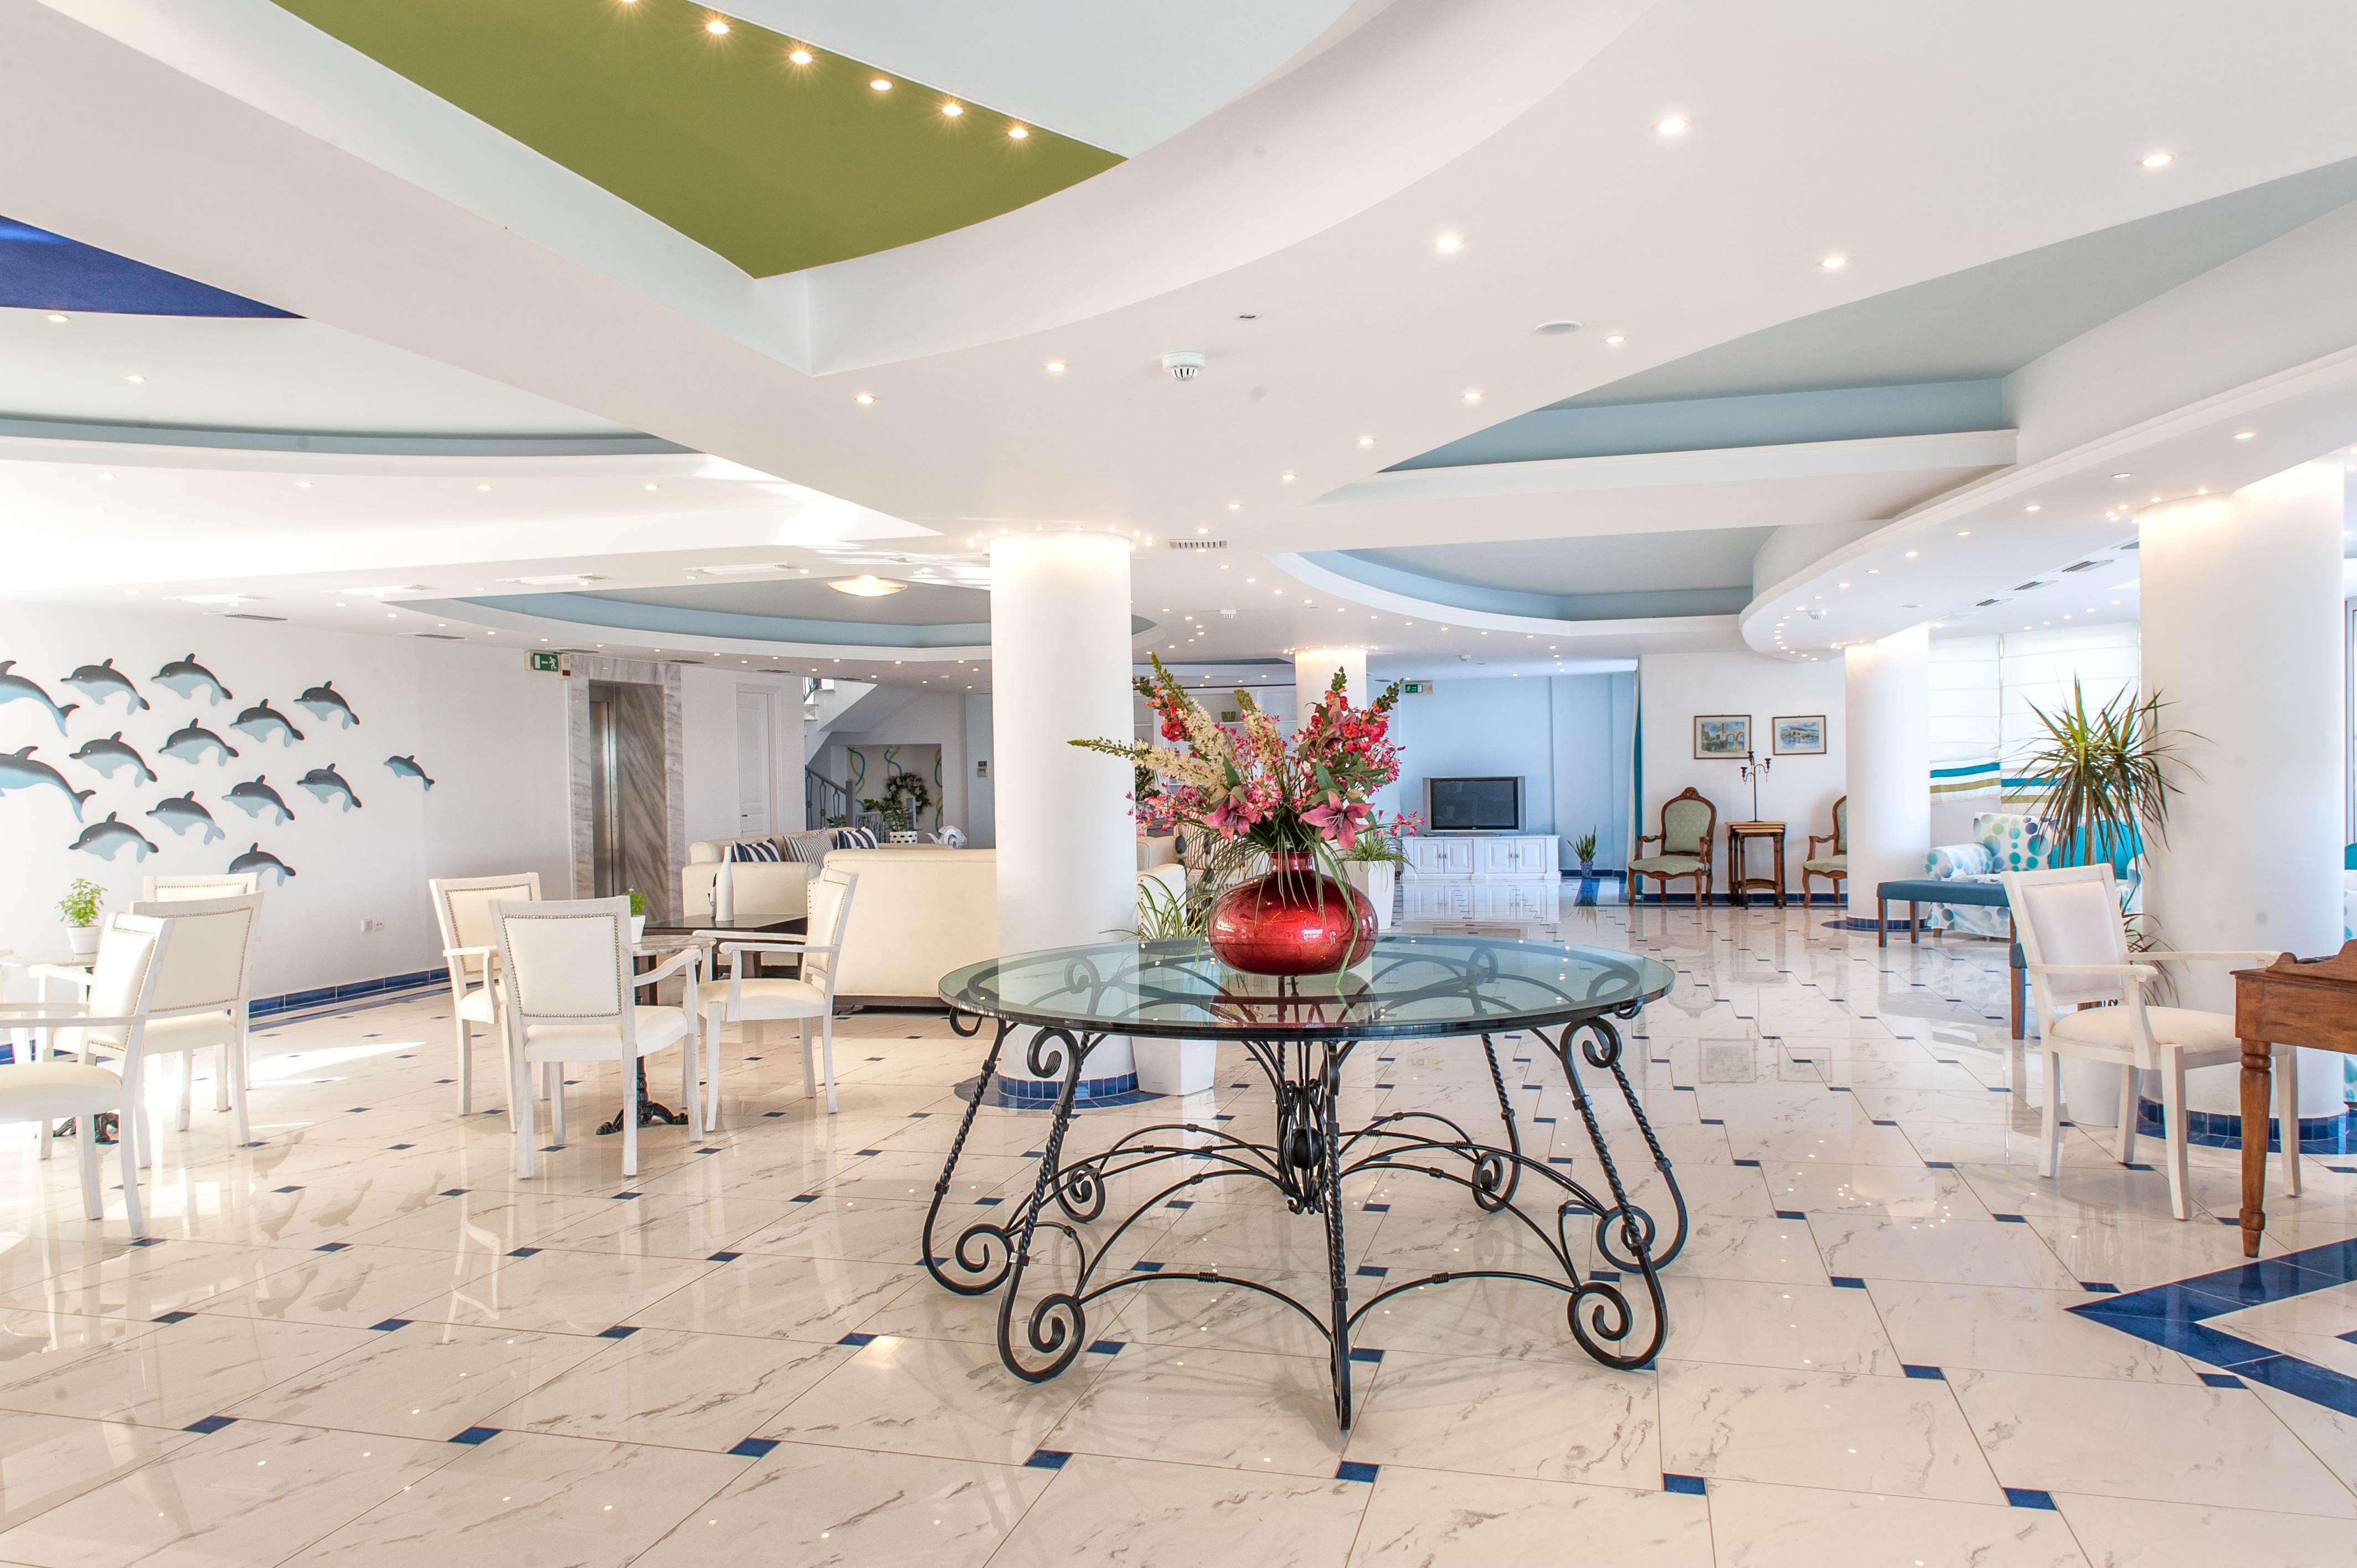 Gerakas Belvedere Luxury Suites and Spa Zakynthos 